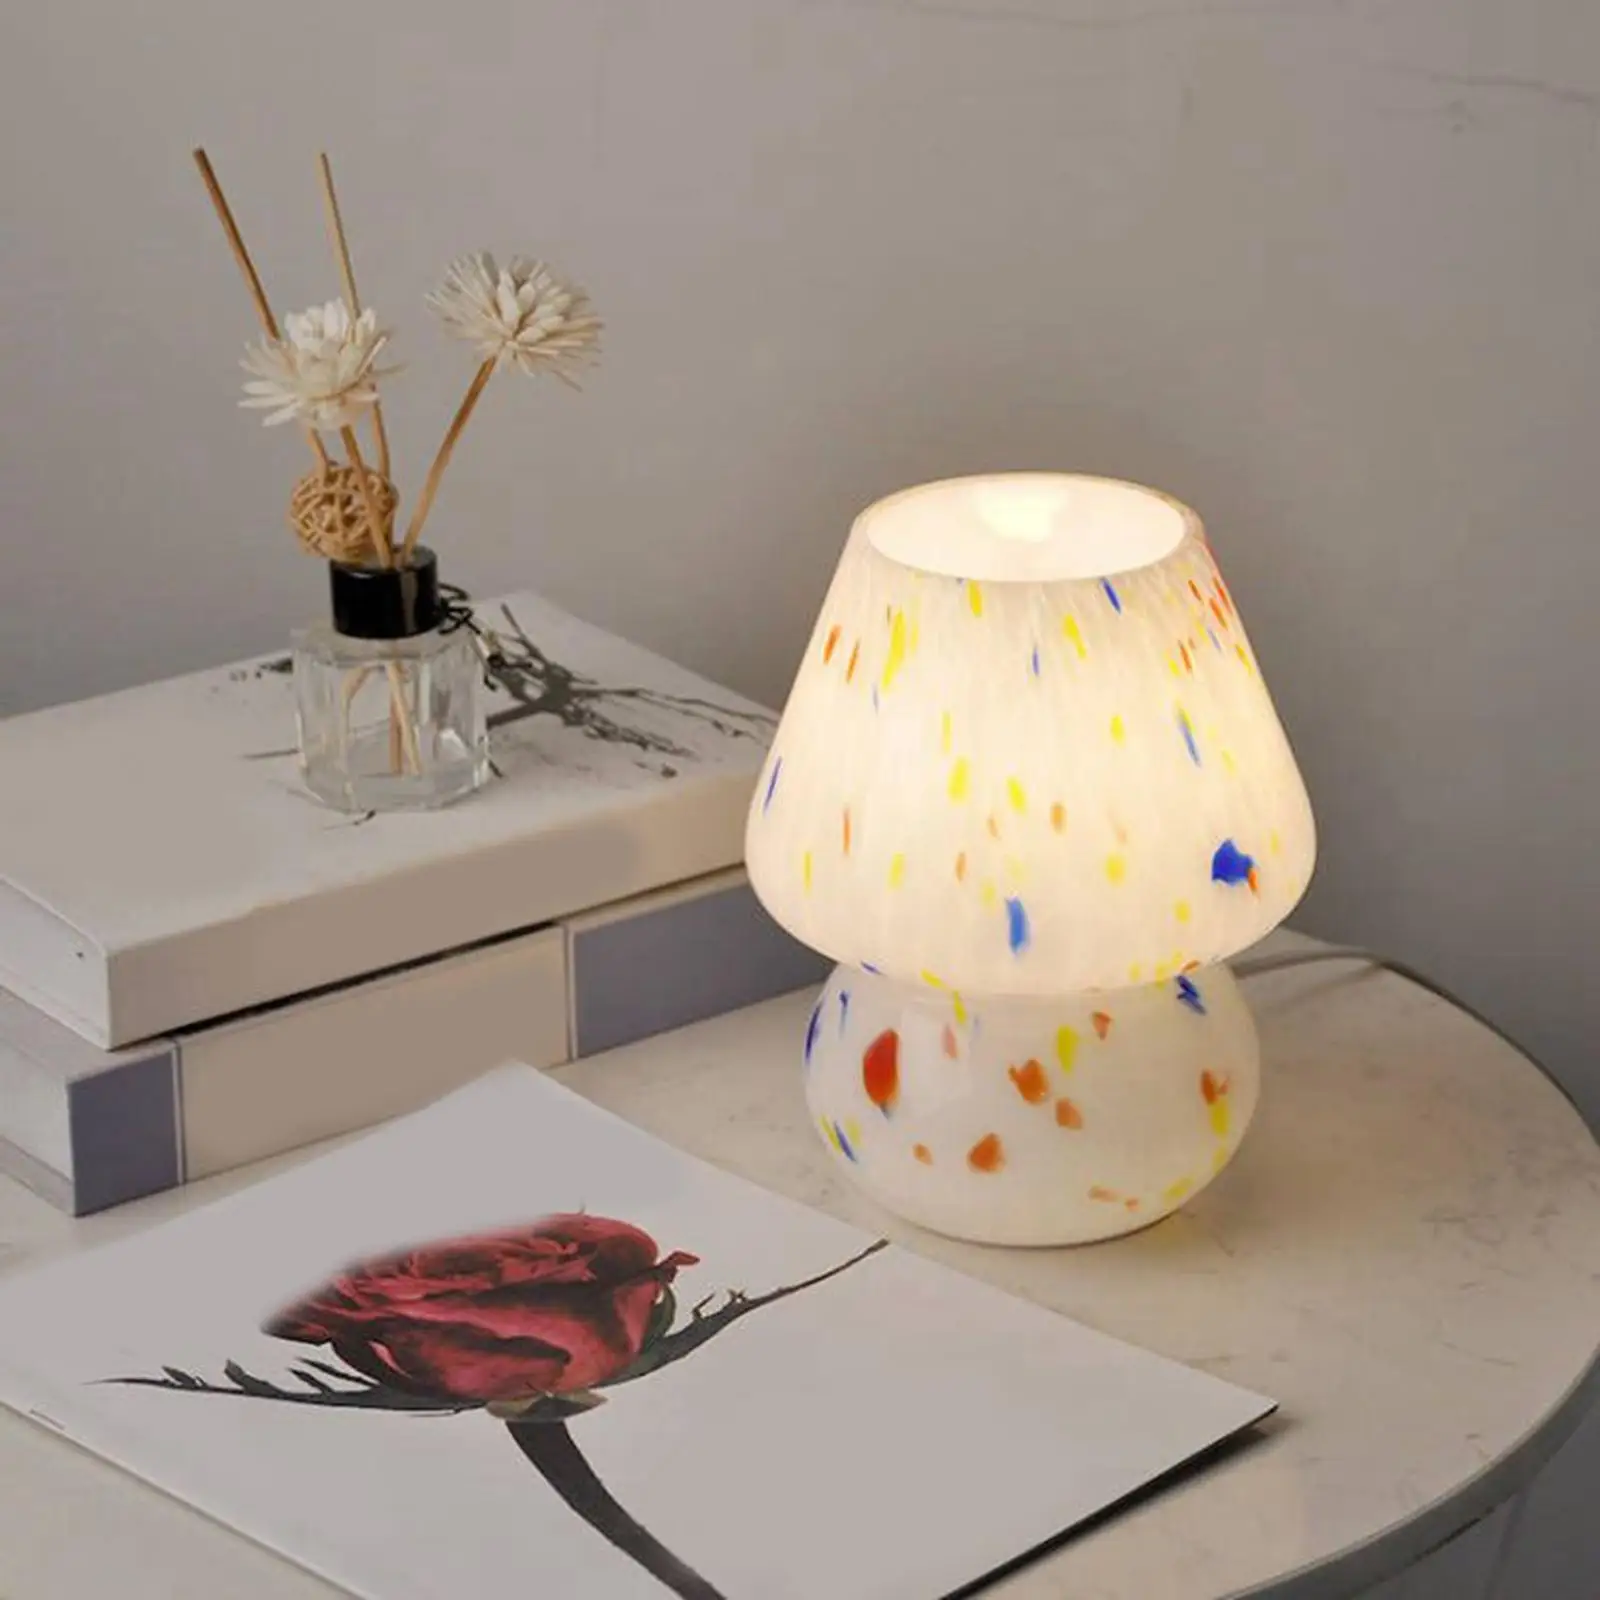 Glass Lamp Shade Mushroom Table Lamp Night Lights LED Decorative Warm Lights USB Night Lamps for LivingRoom,Office Bedside Study